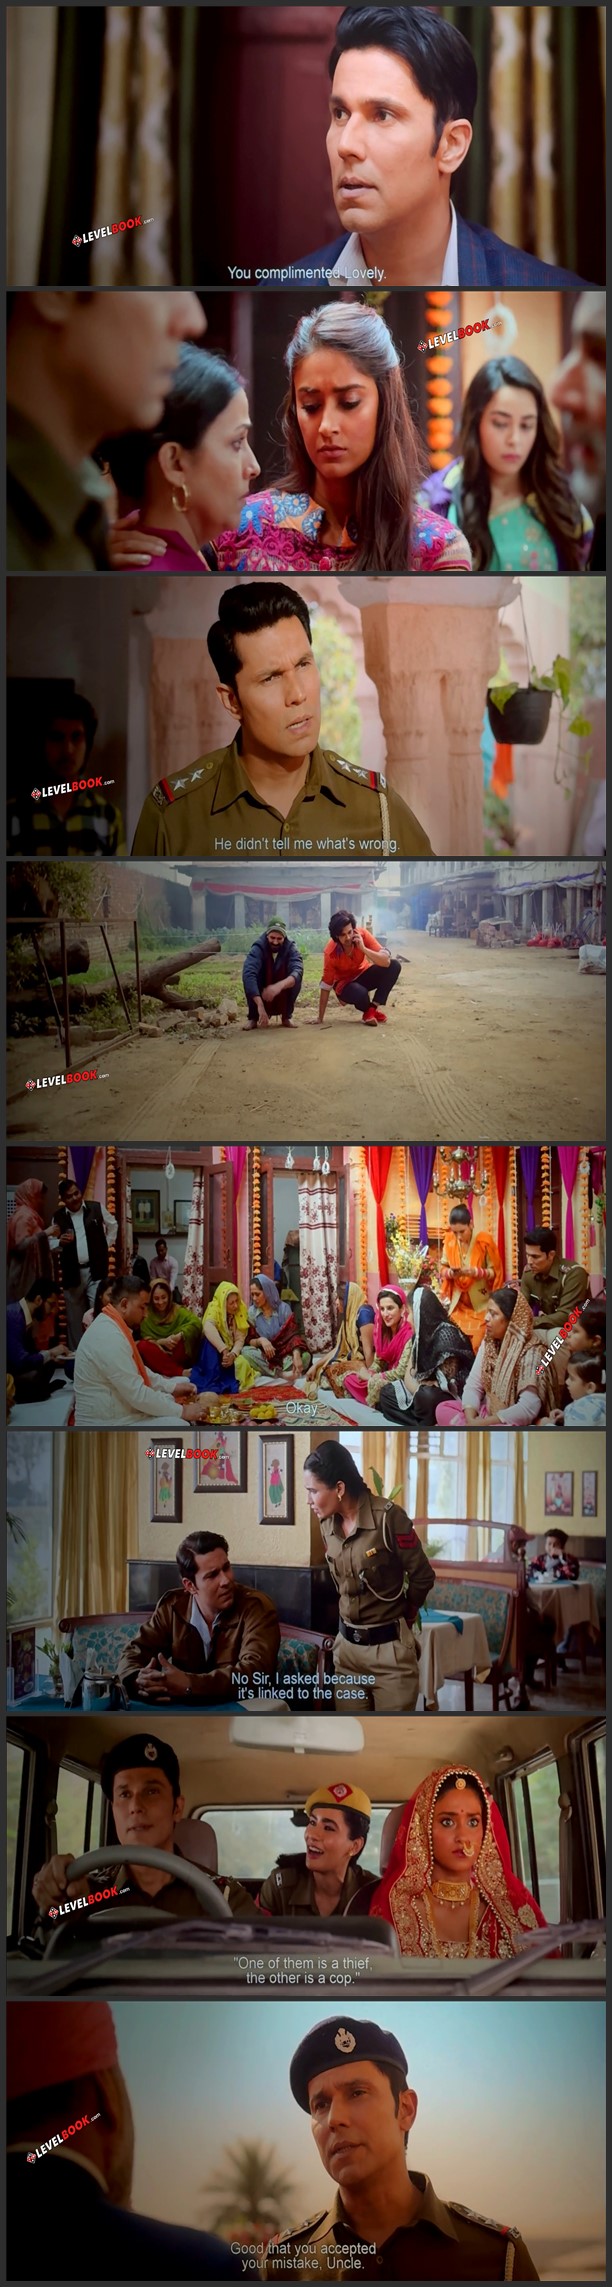 Tera Kya Hoga Lovely 2024 Hindi (Cleaned) 1080p 720p 480p HDTS x264 HC-ESub Full Movie Download